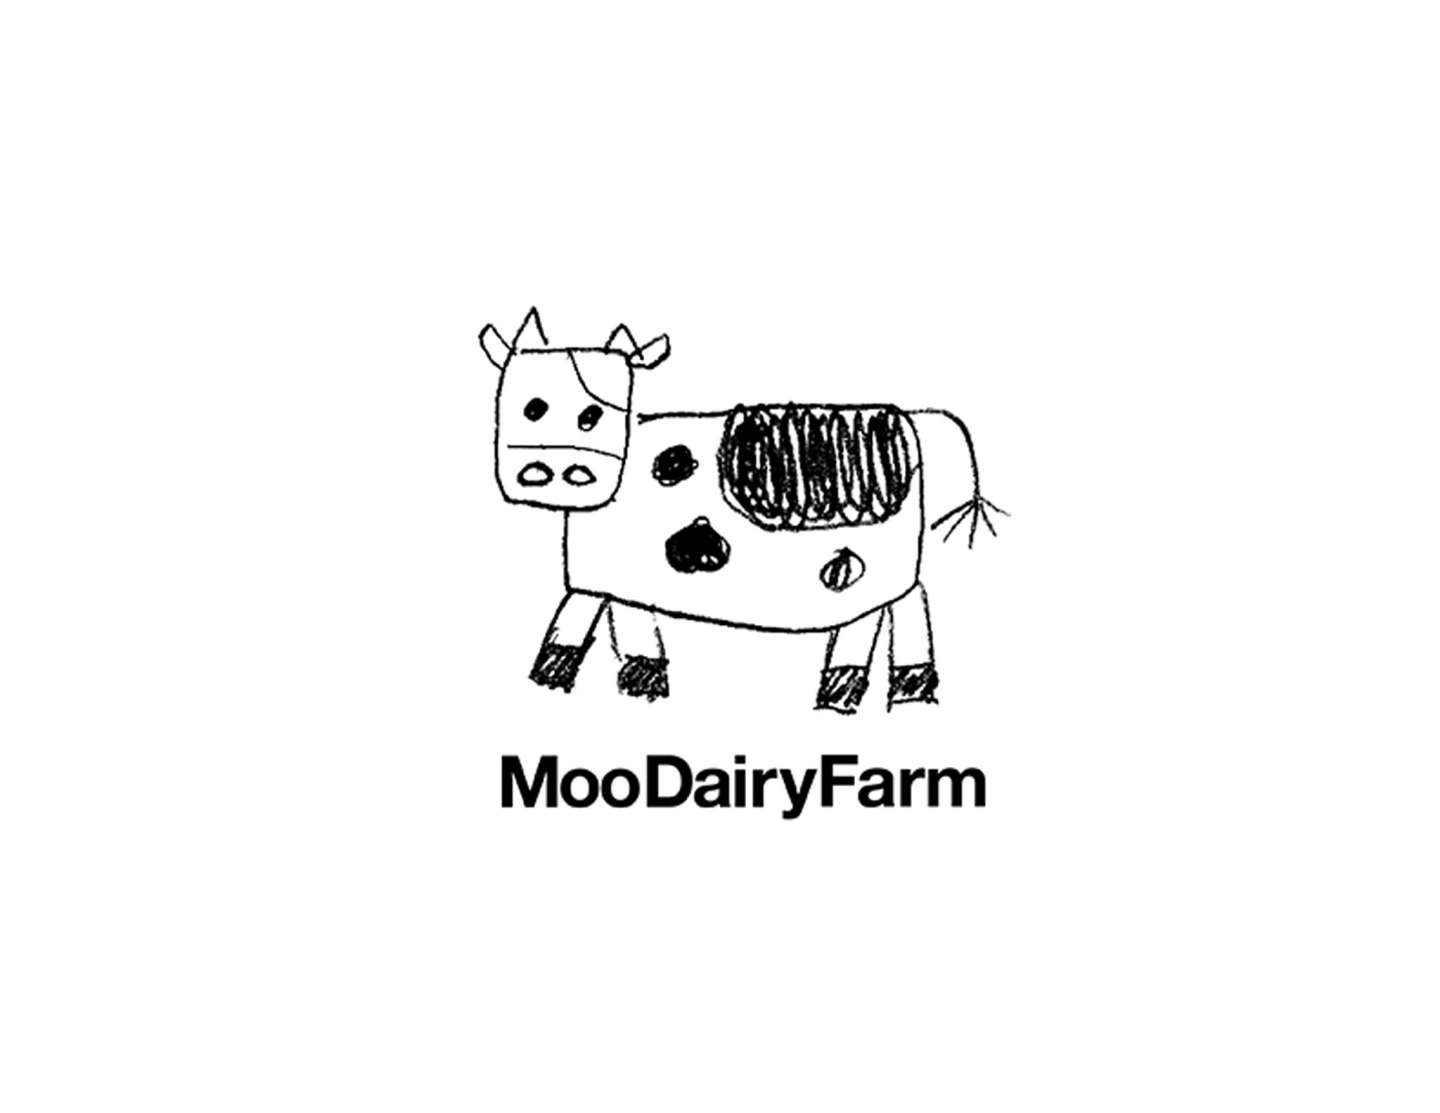 Moo Dairy Farm